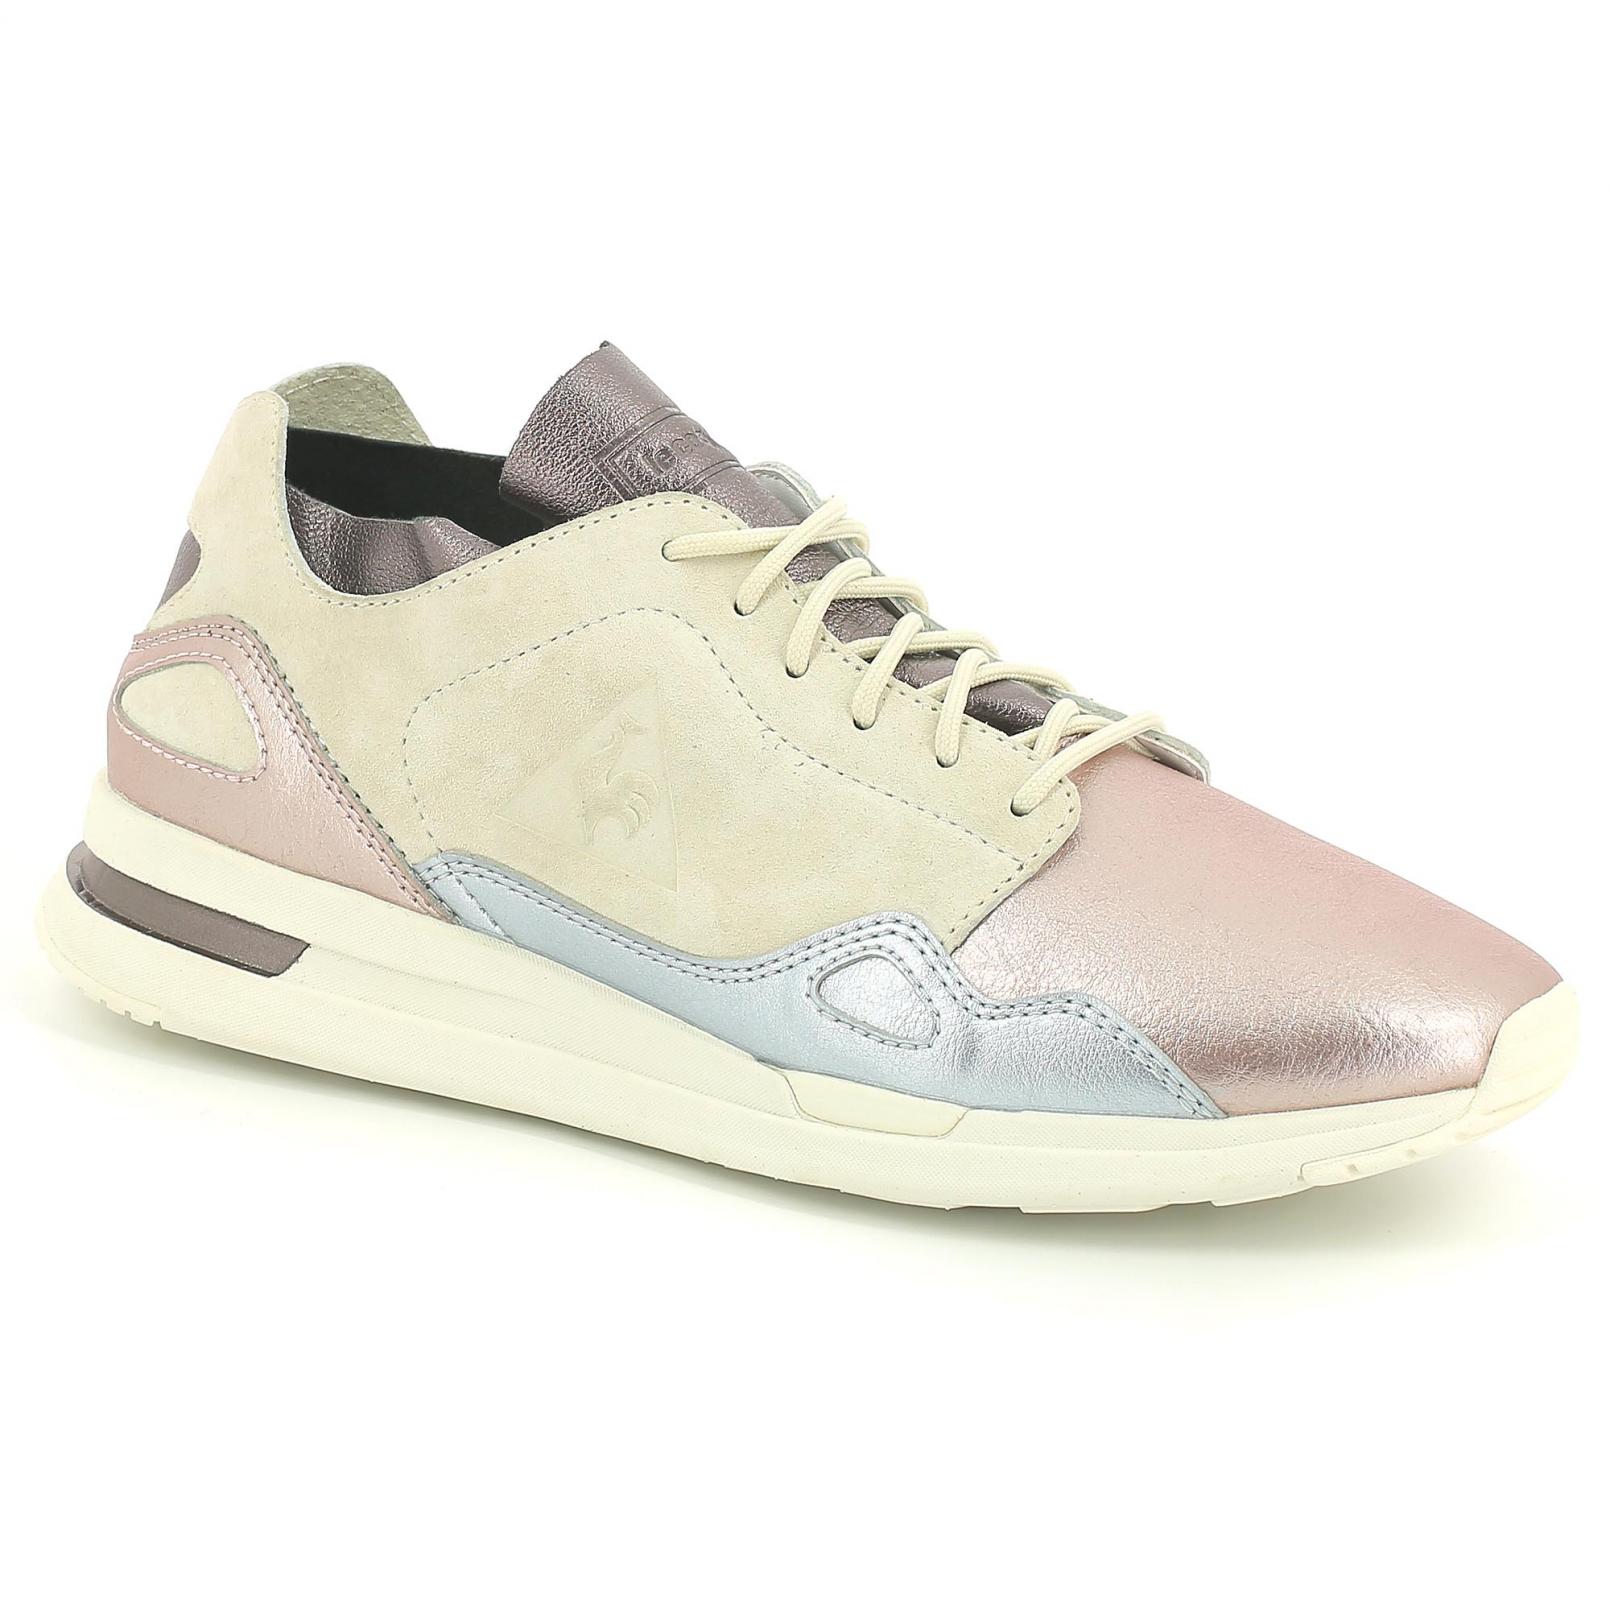 Shoes – Le Coq Sportif Lcs R Flow W Metallic Leather Mix Multicolored